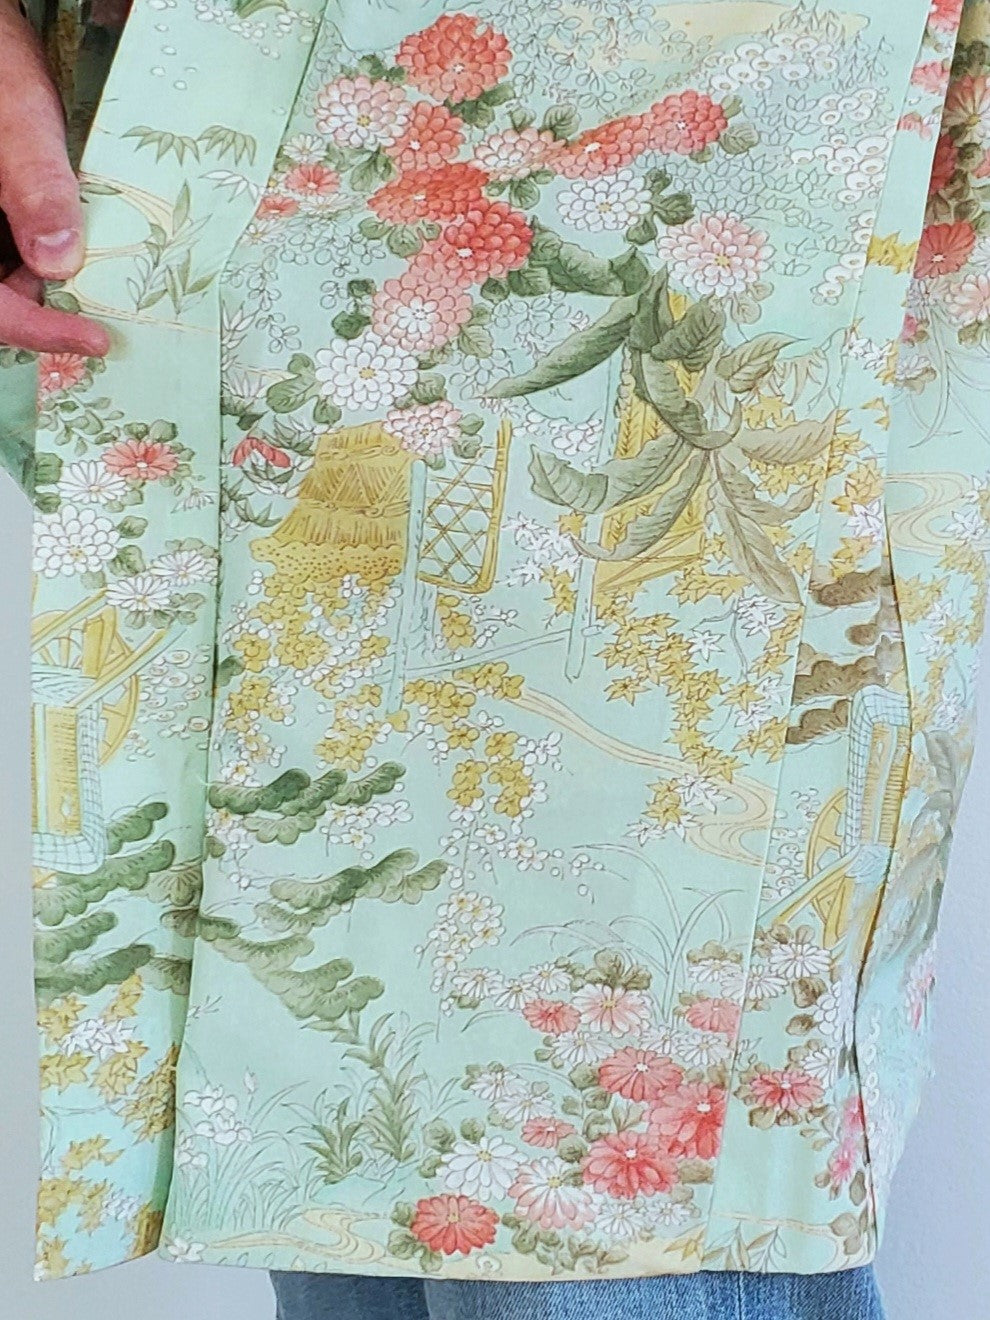 【Light yellowish green/ Garden】Japanese Vintage Kimono Haori, Japanese Hanten Jacket, Robe Dress, Japanese Floral pattern, Unisex